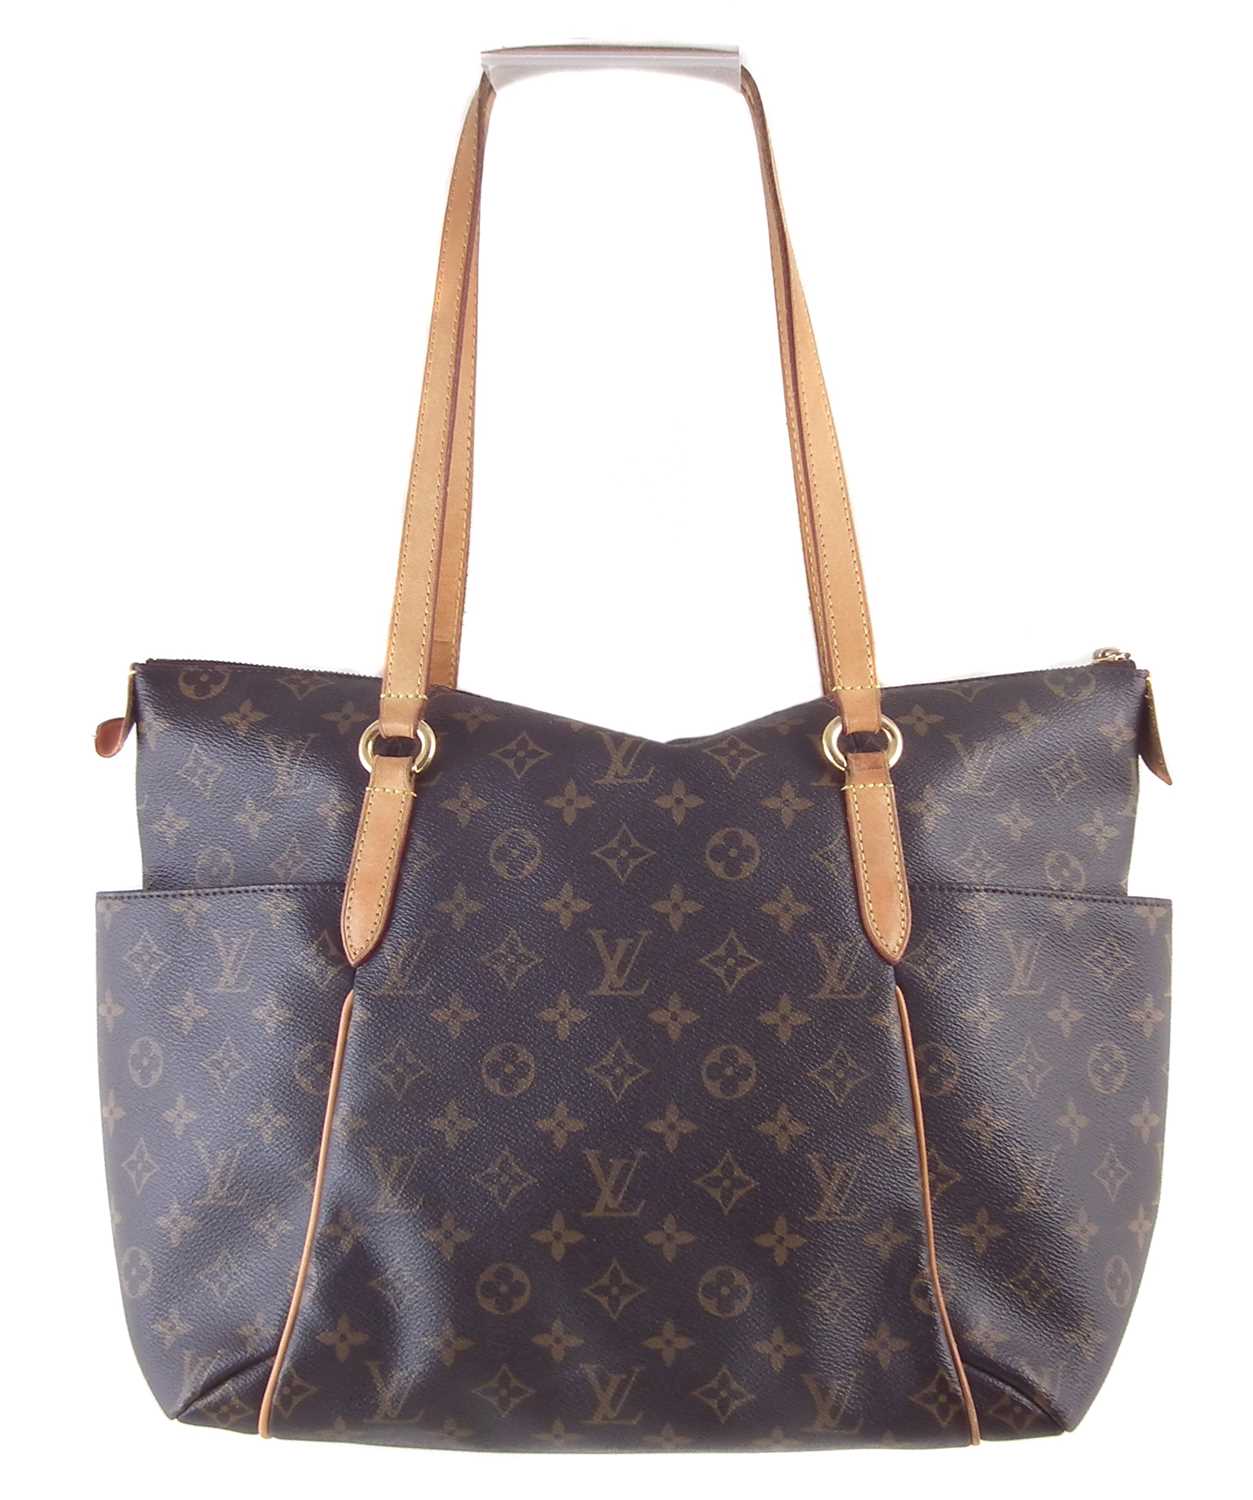 A Louis Vuitton Monogram Totally MM handbag, - Image 2 of 2